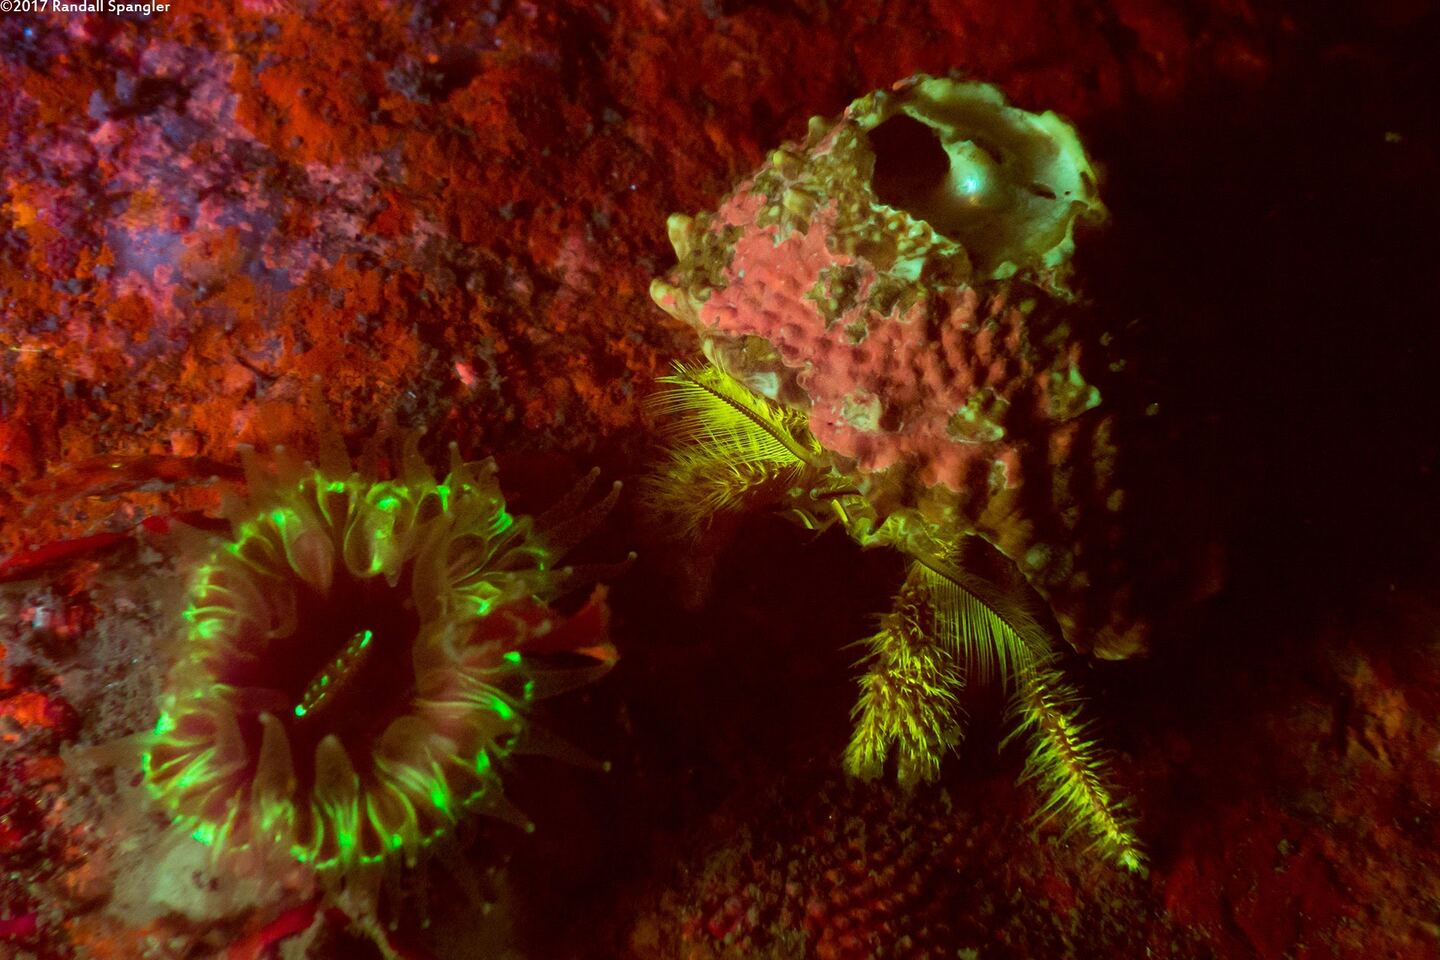 Paguristes ulreyi (Furry Hermit Crab); Fluorescing under blue light